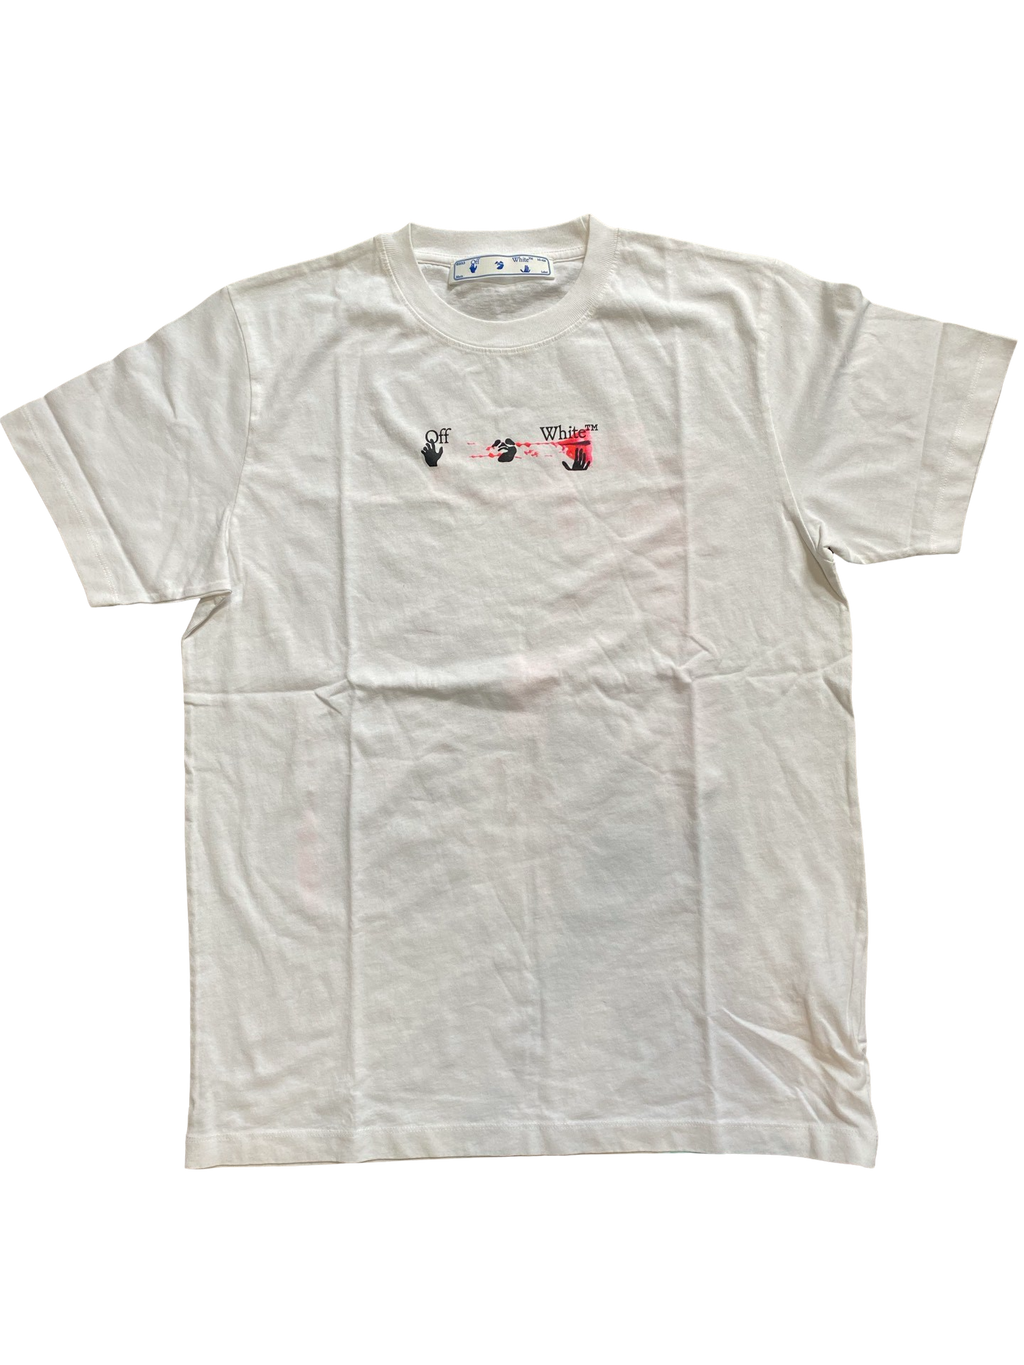 OFF WHITE White Acrylic Arrow Graphic T-Shirt